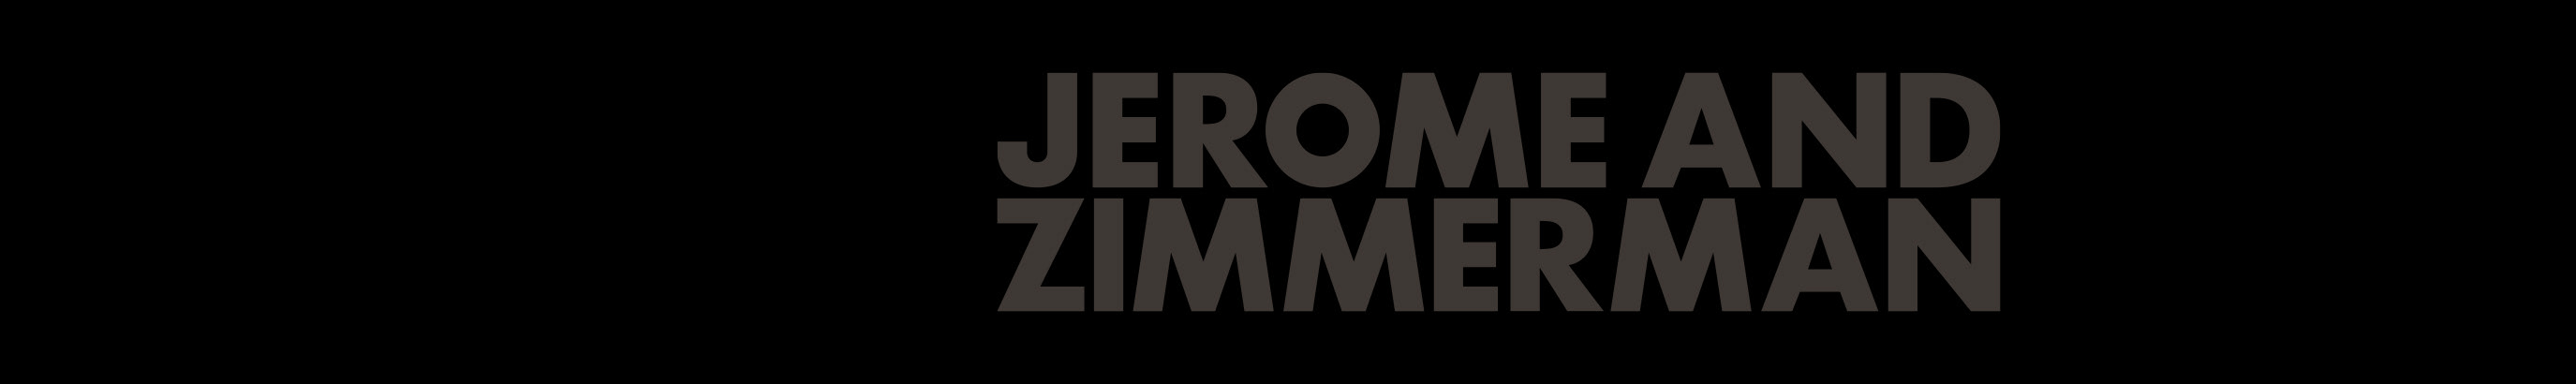 Baner profilu użytkownika Jerome & Zimmerman